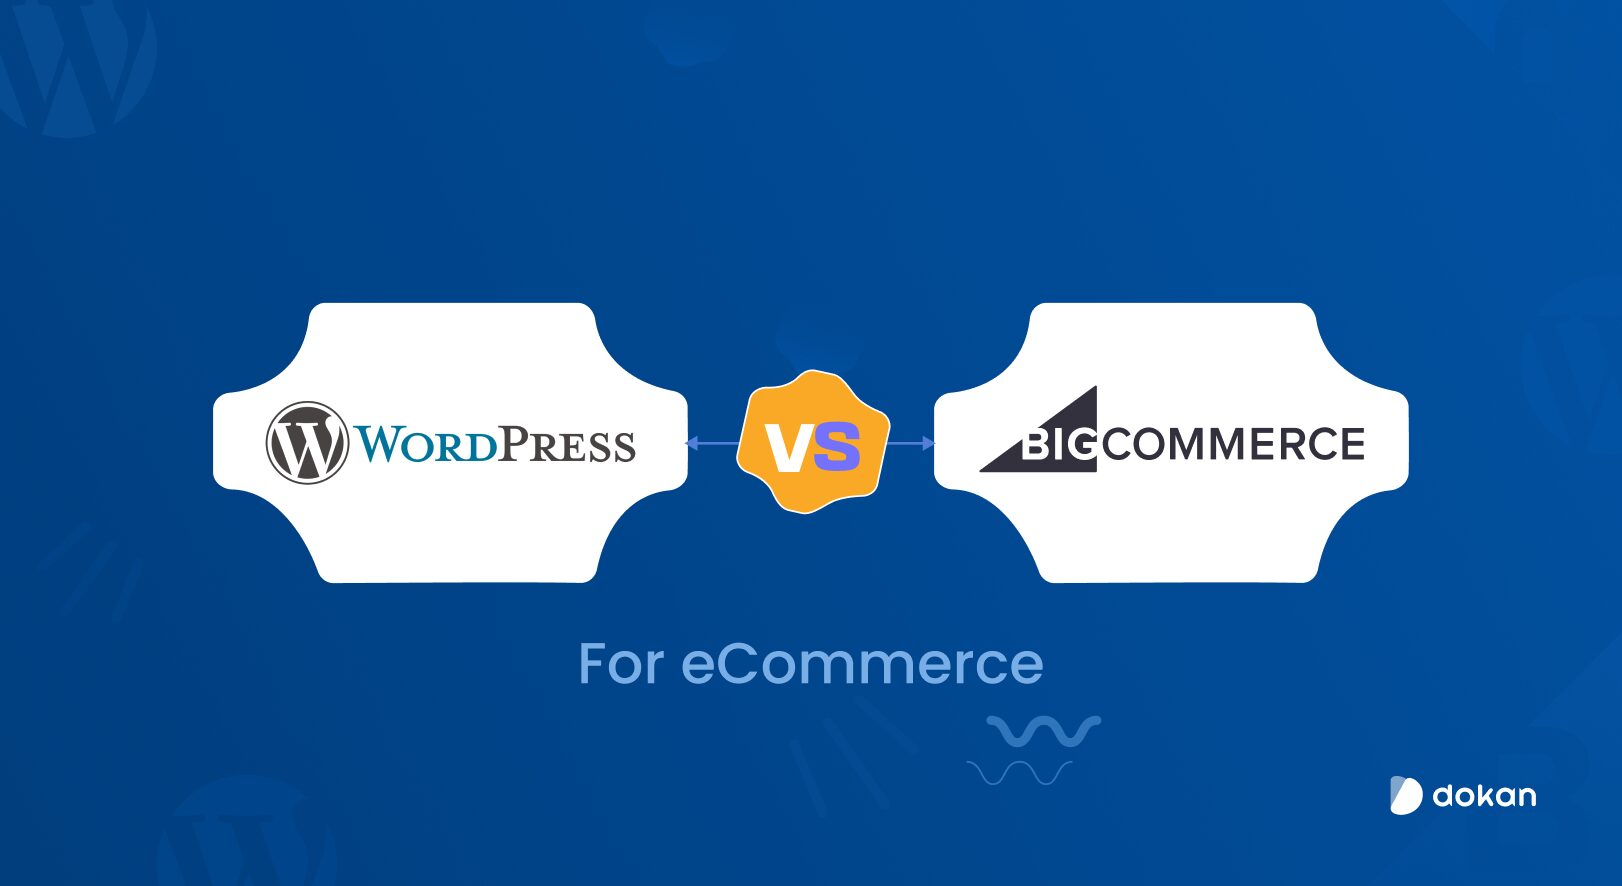 BigCommerce vs WordPress for eCommerce